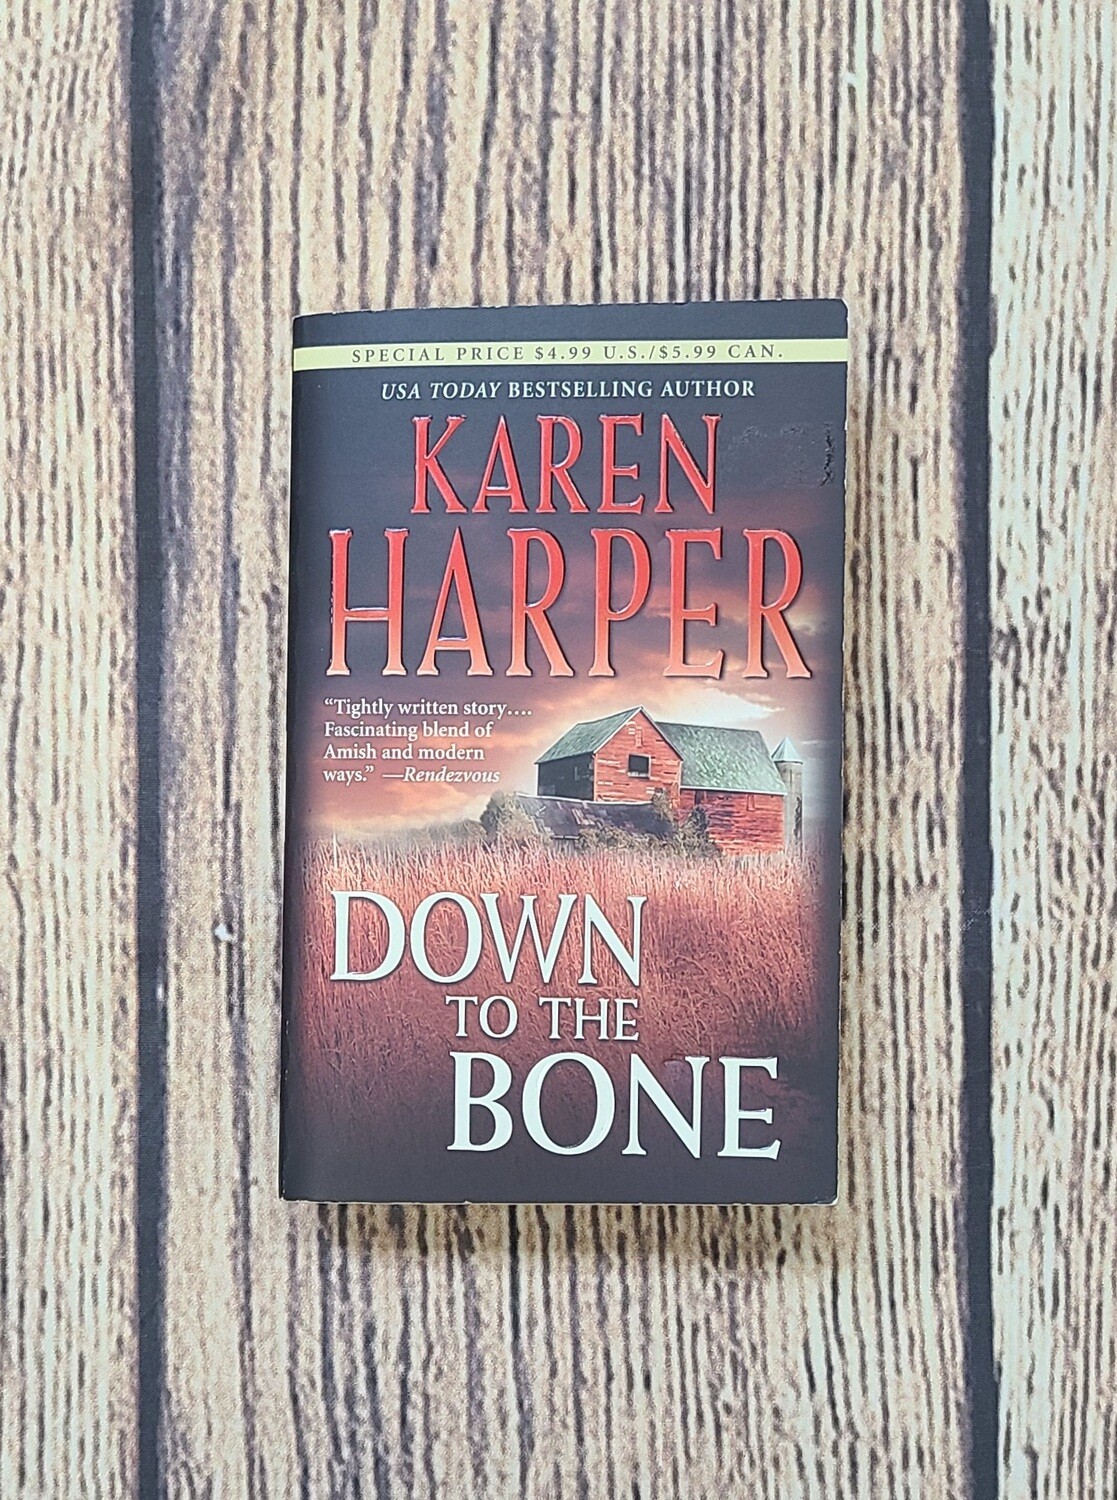 Down to the Bone by Karen Harper